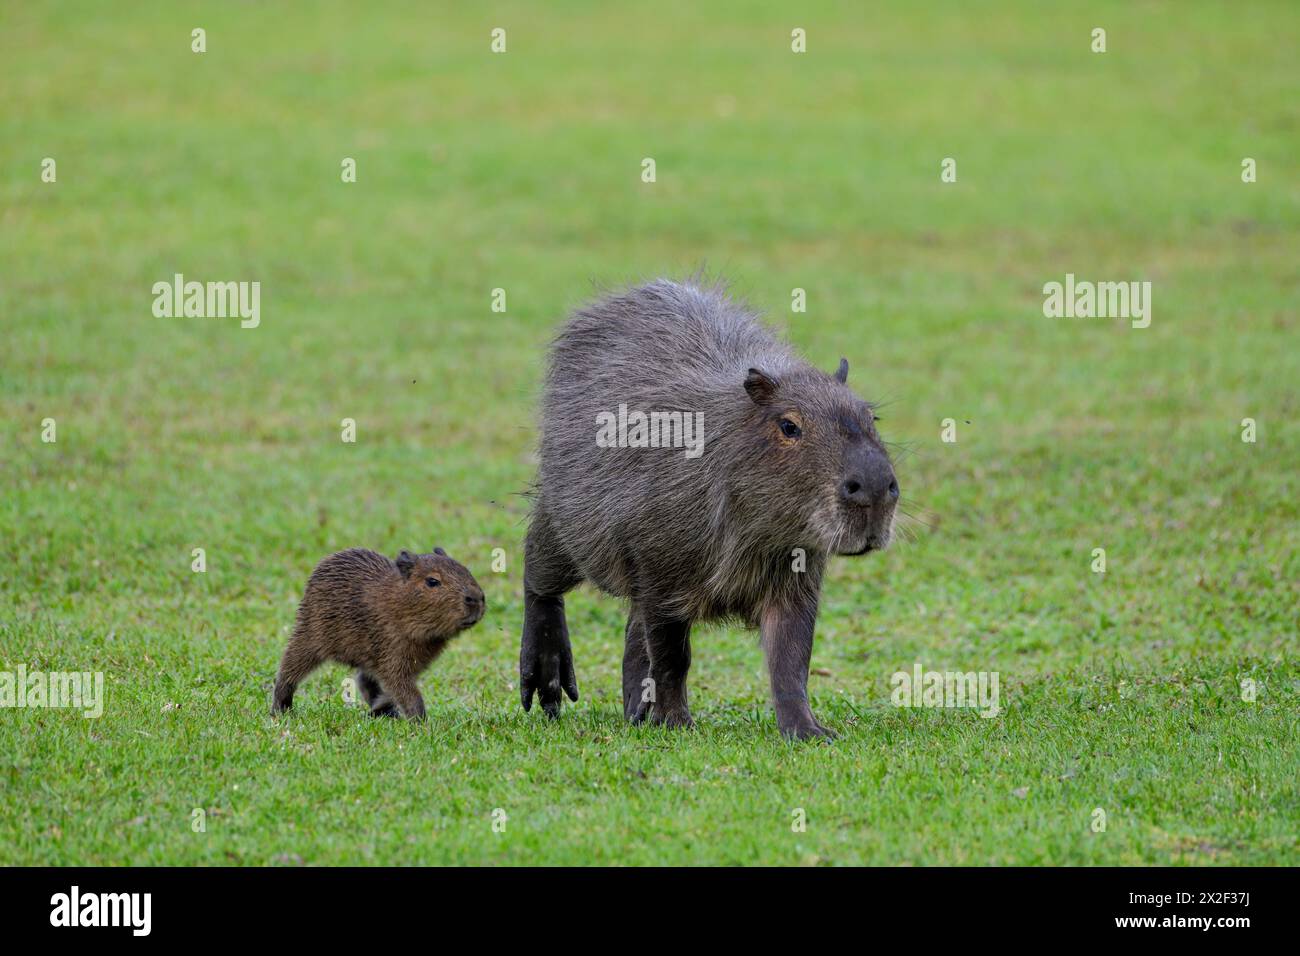 zoology, mammal (mammalia), capibara or capybara (Hydrochoerus hydrochaeris) with offspring, ADDITIONAL-RIGHTS-CLEARANCE-INFO-NOT-AVAILABLE Stock Photo